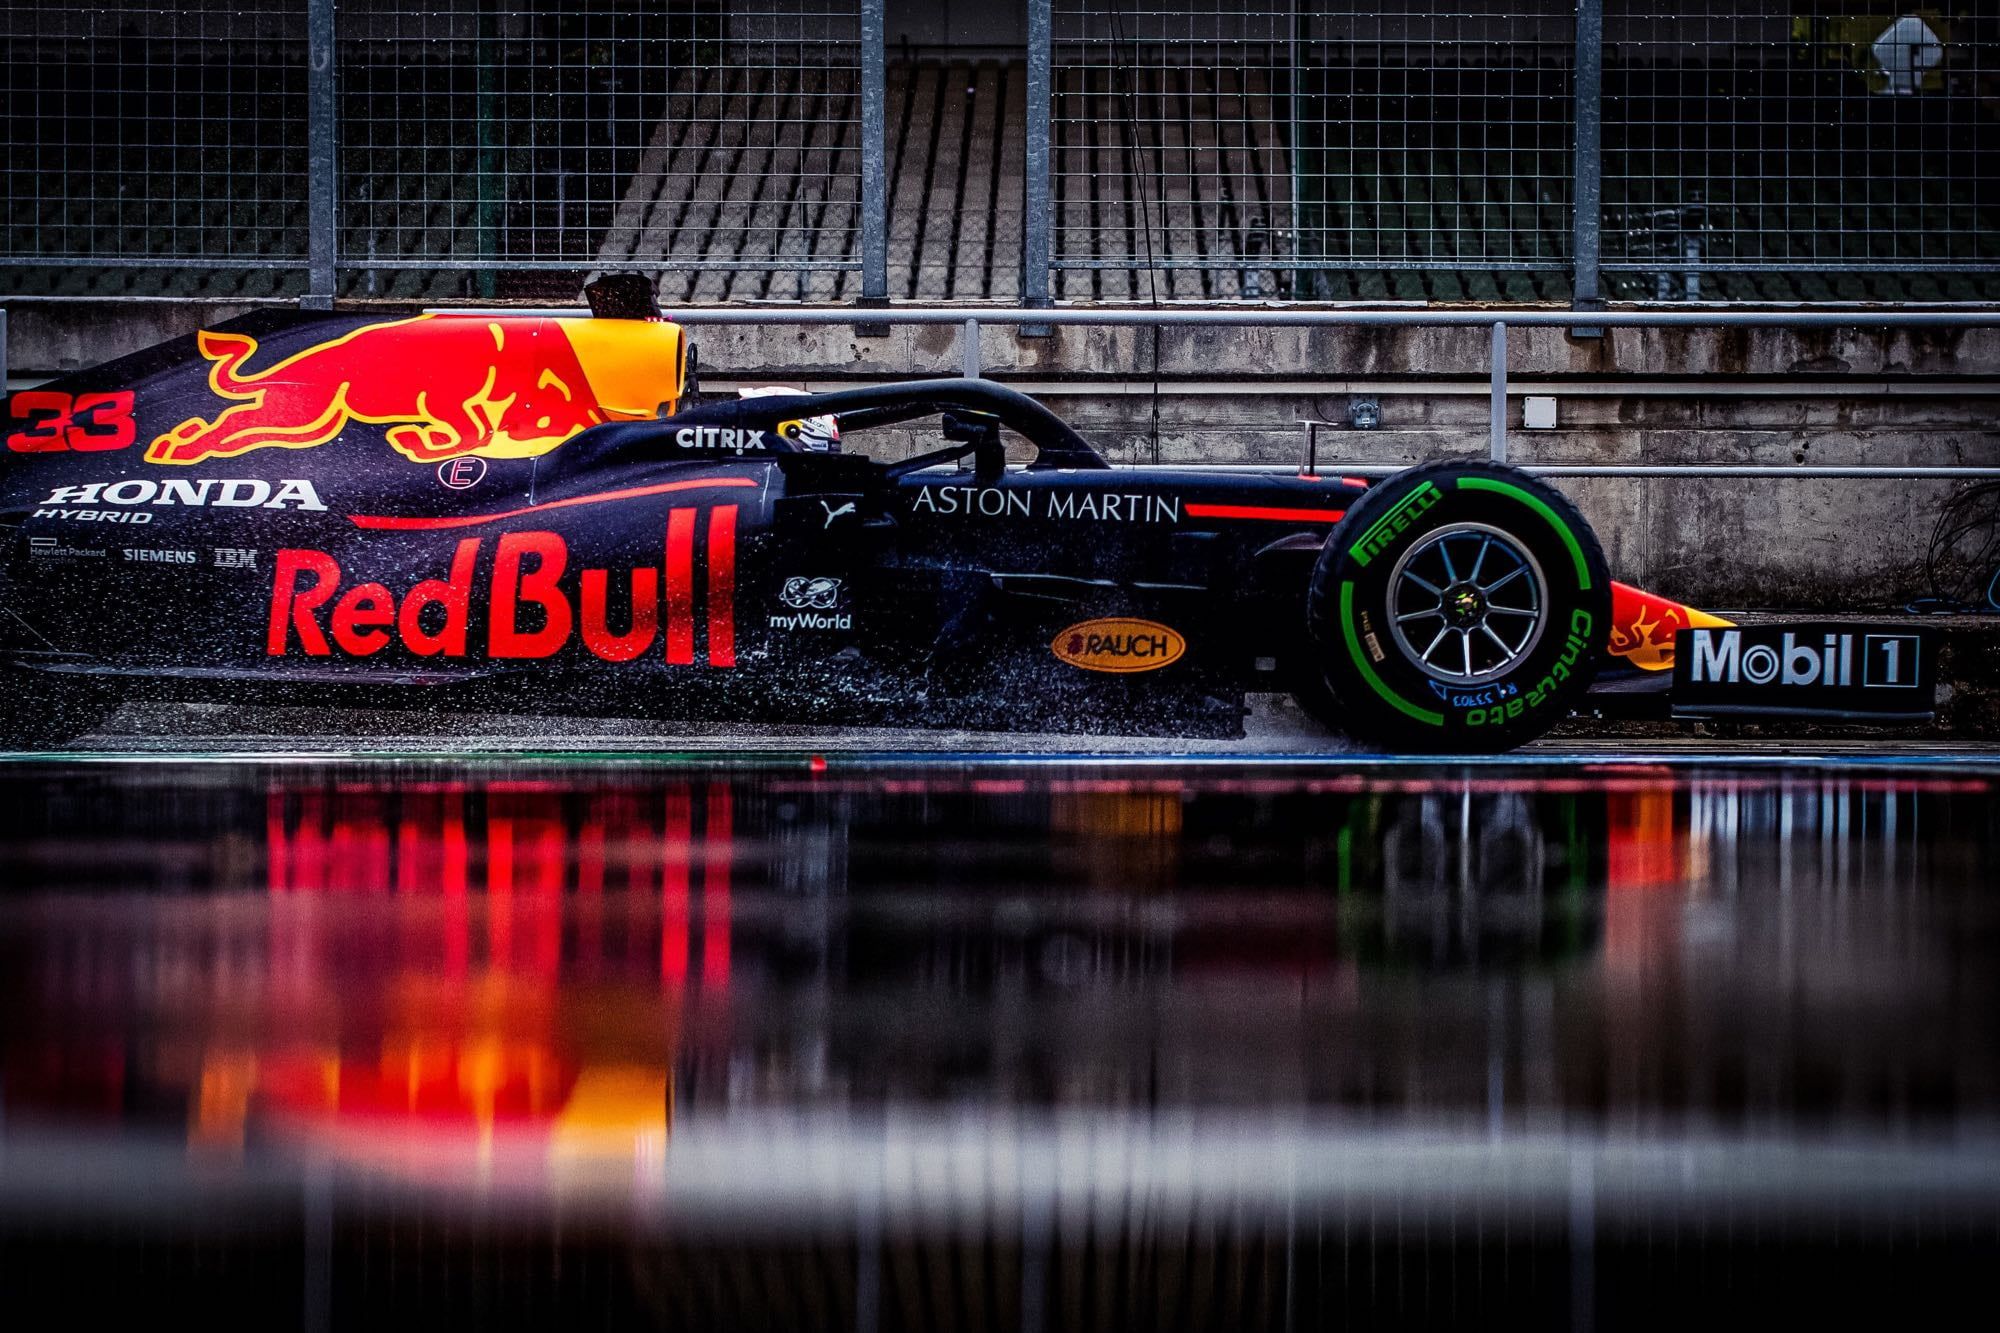 Red Bull Red Bull Racing Max Verstappen Aston Martin #Honda MOBIL 1 P # wallpaper #hdwallpaper #desktop. Red bull racing, Racing, Red bull f1